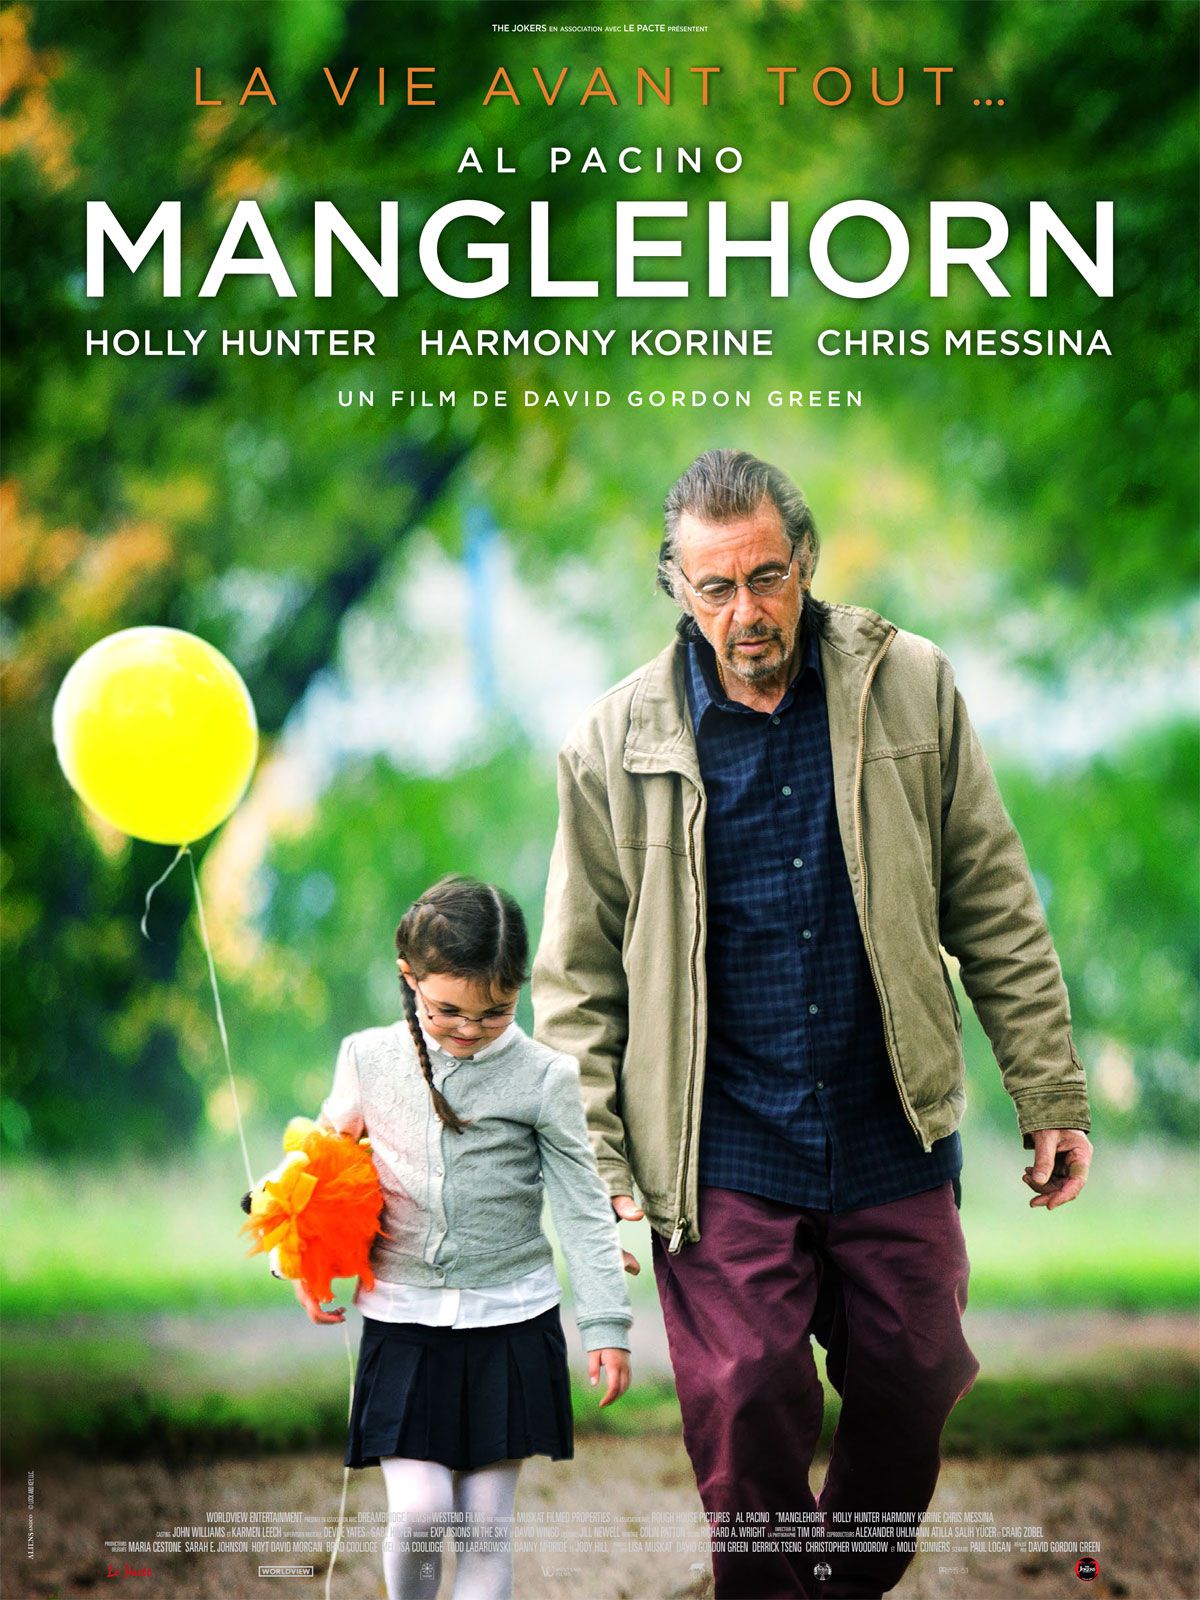 Manglehorn - Film (2015) streaming VF gratuit complet